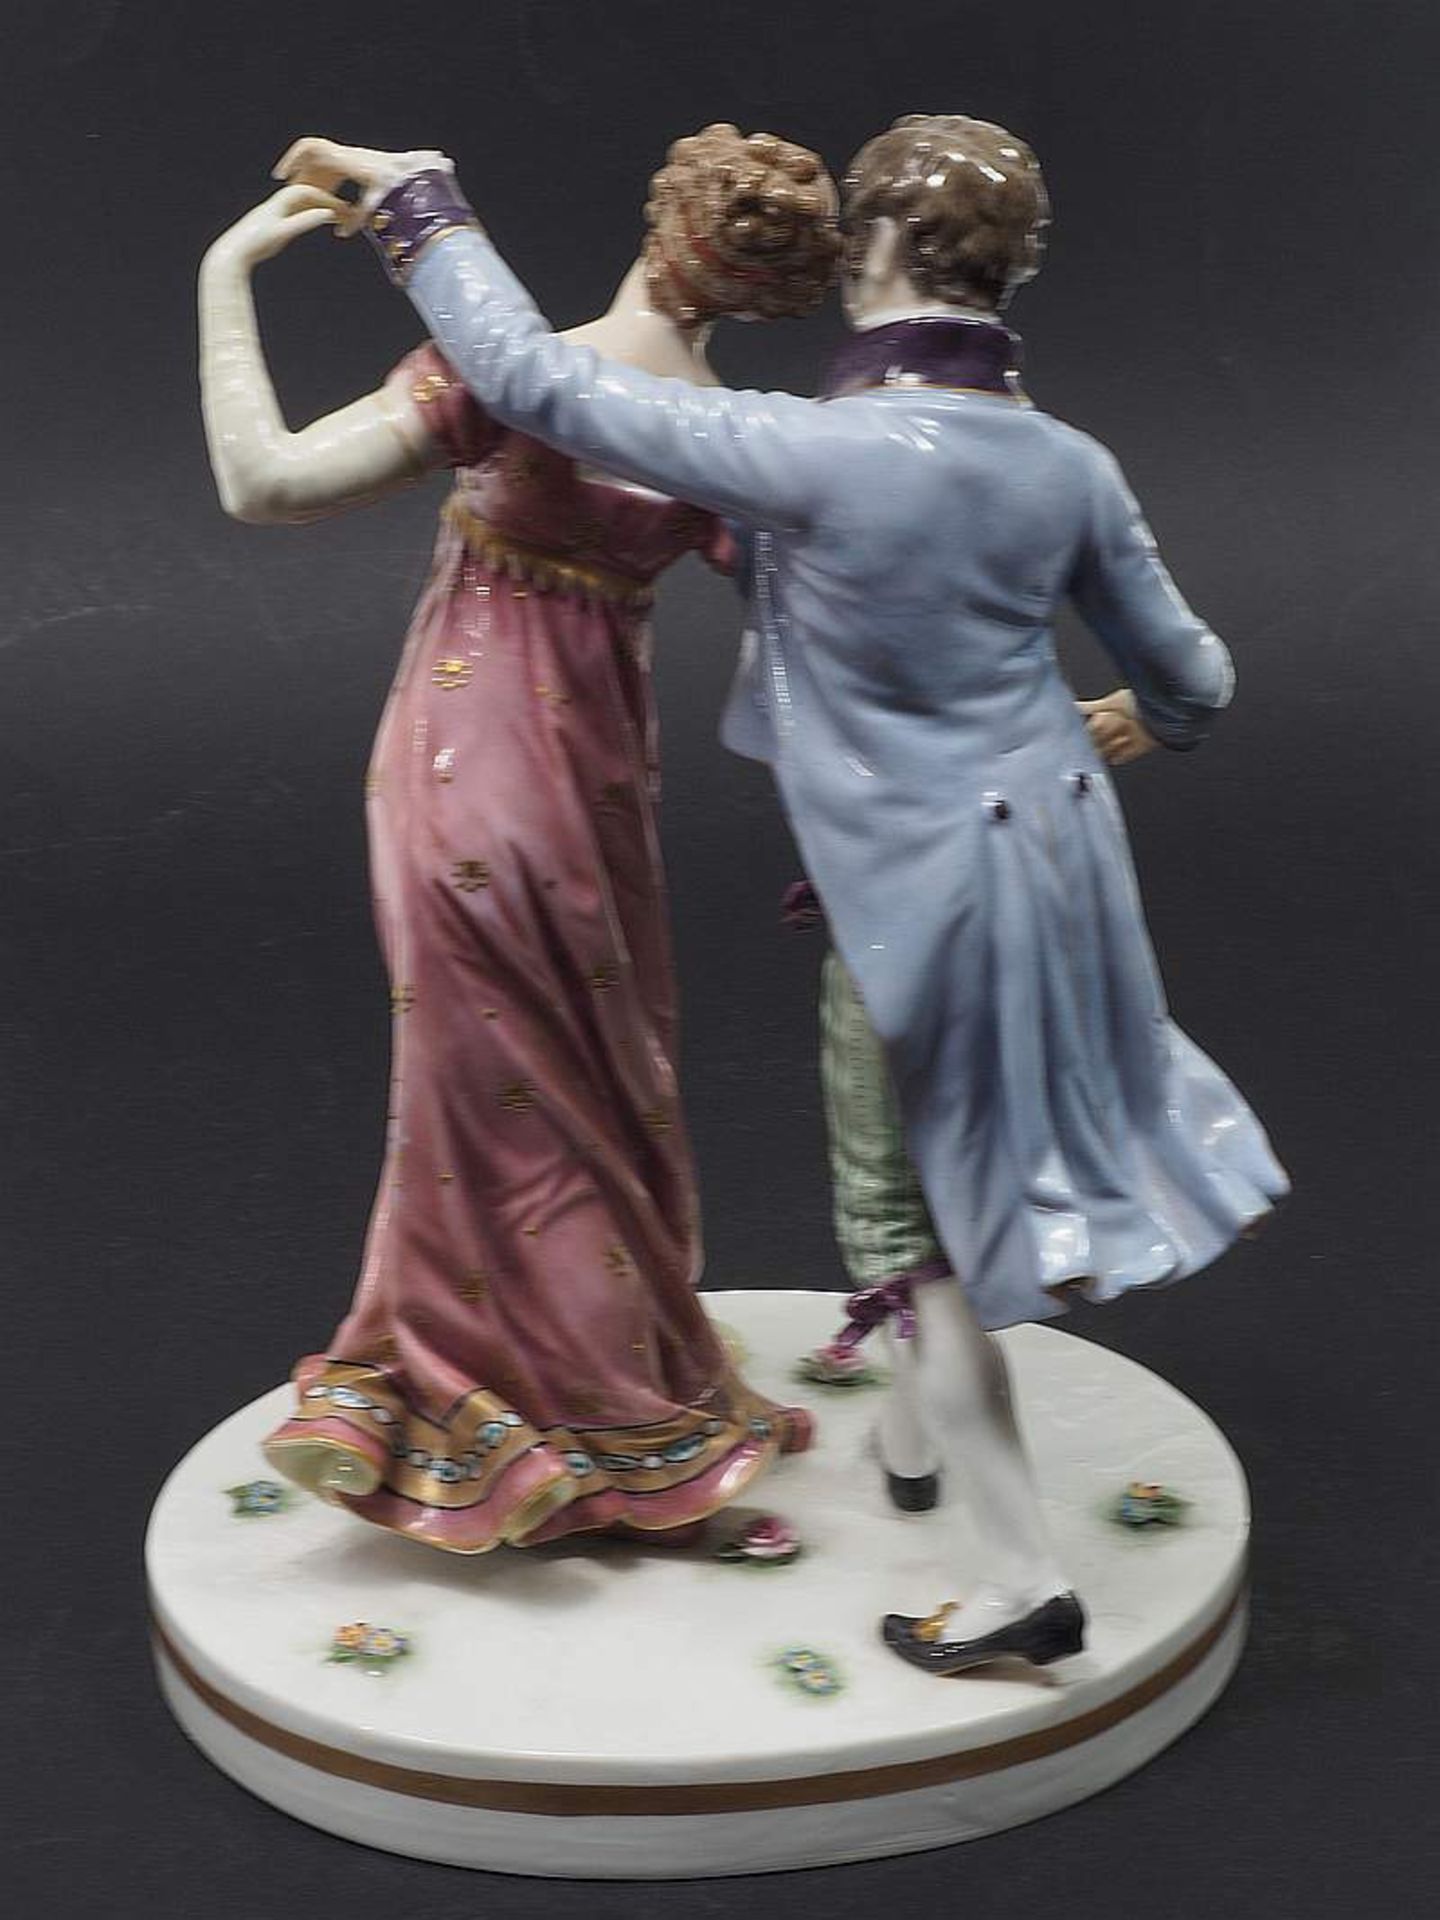 Tanzendes Paar. PASSAU Dressel, Kister & Cie, Marke 1907 - 1920, Modell Nummer 4794. - Bild 5 aus 8